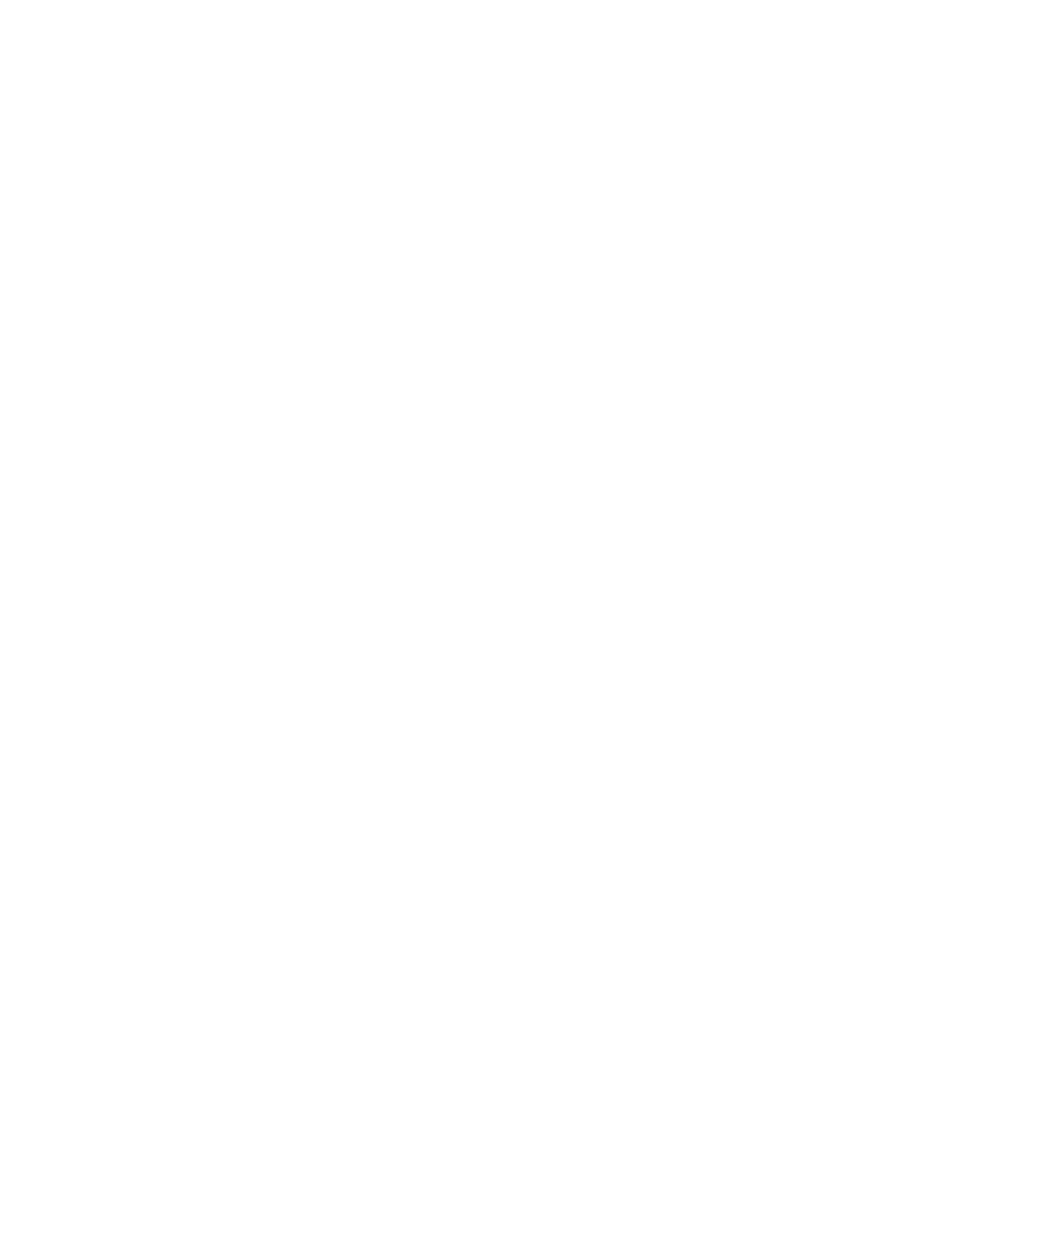 Zsidai Group logo